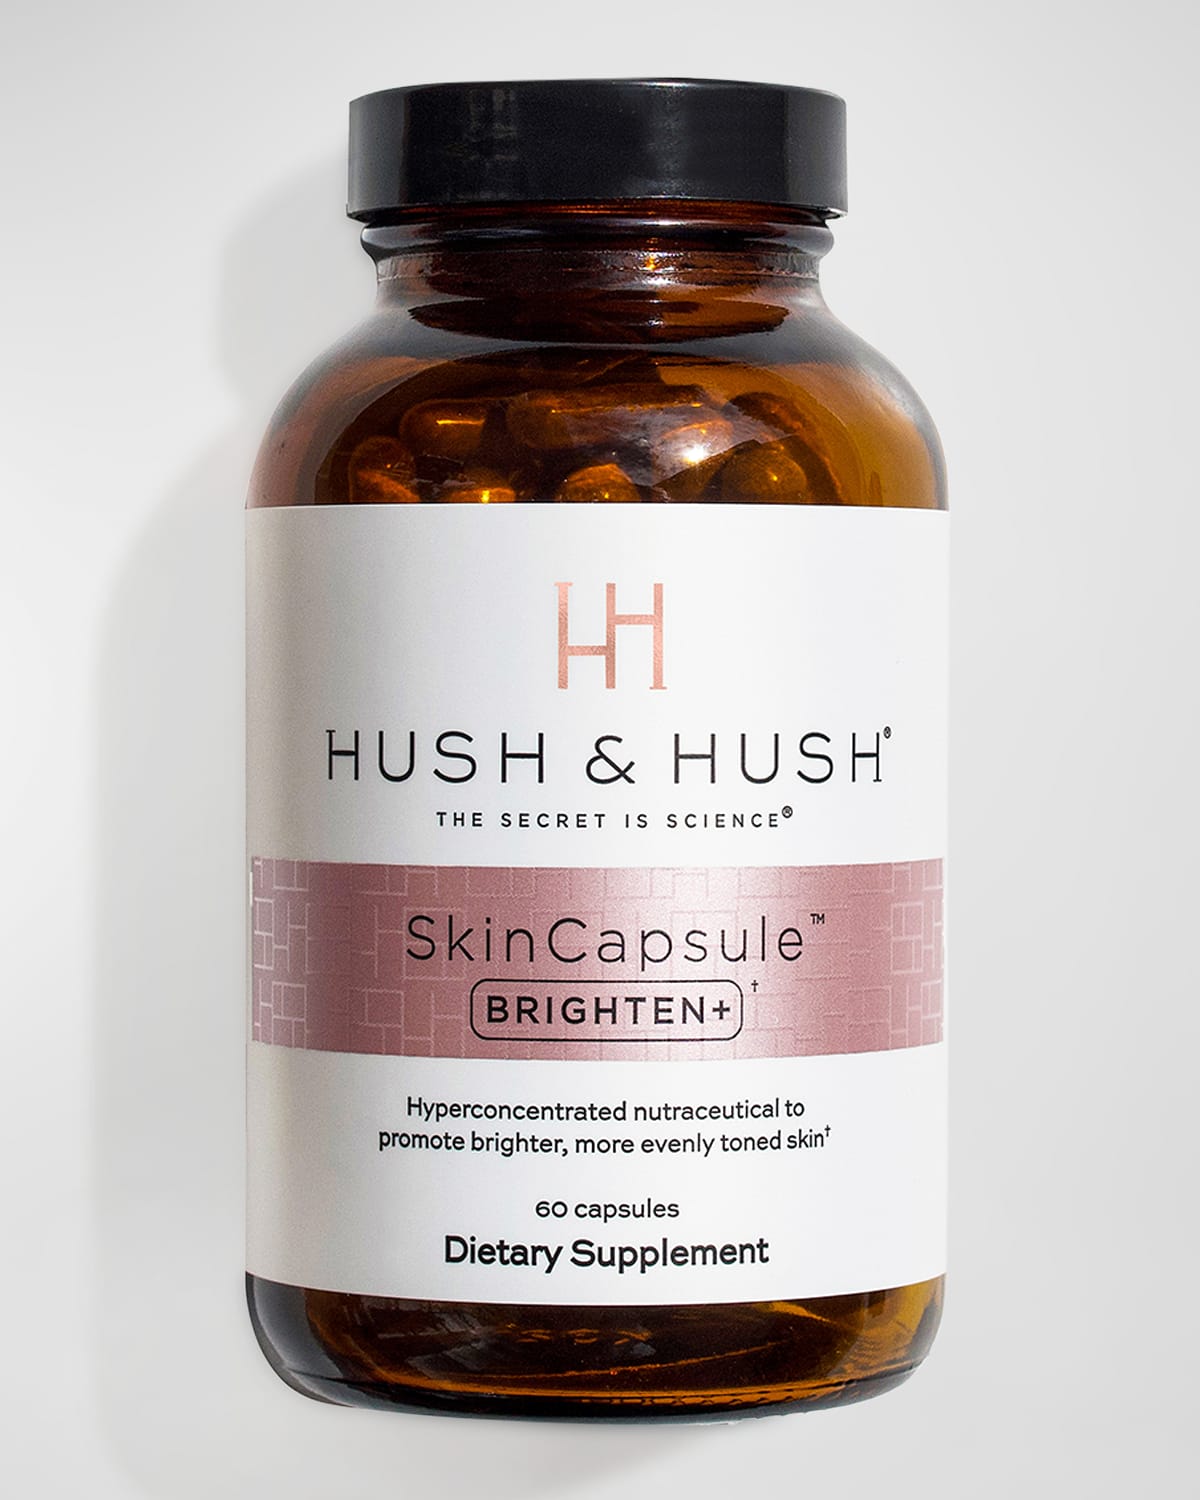 Hush & Hush SkinCapsule BRIGHTEN+ Supplement - 60 Capsules